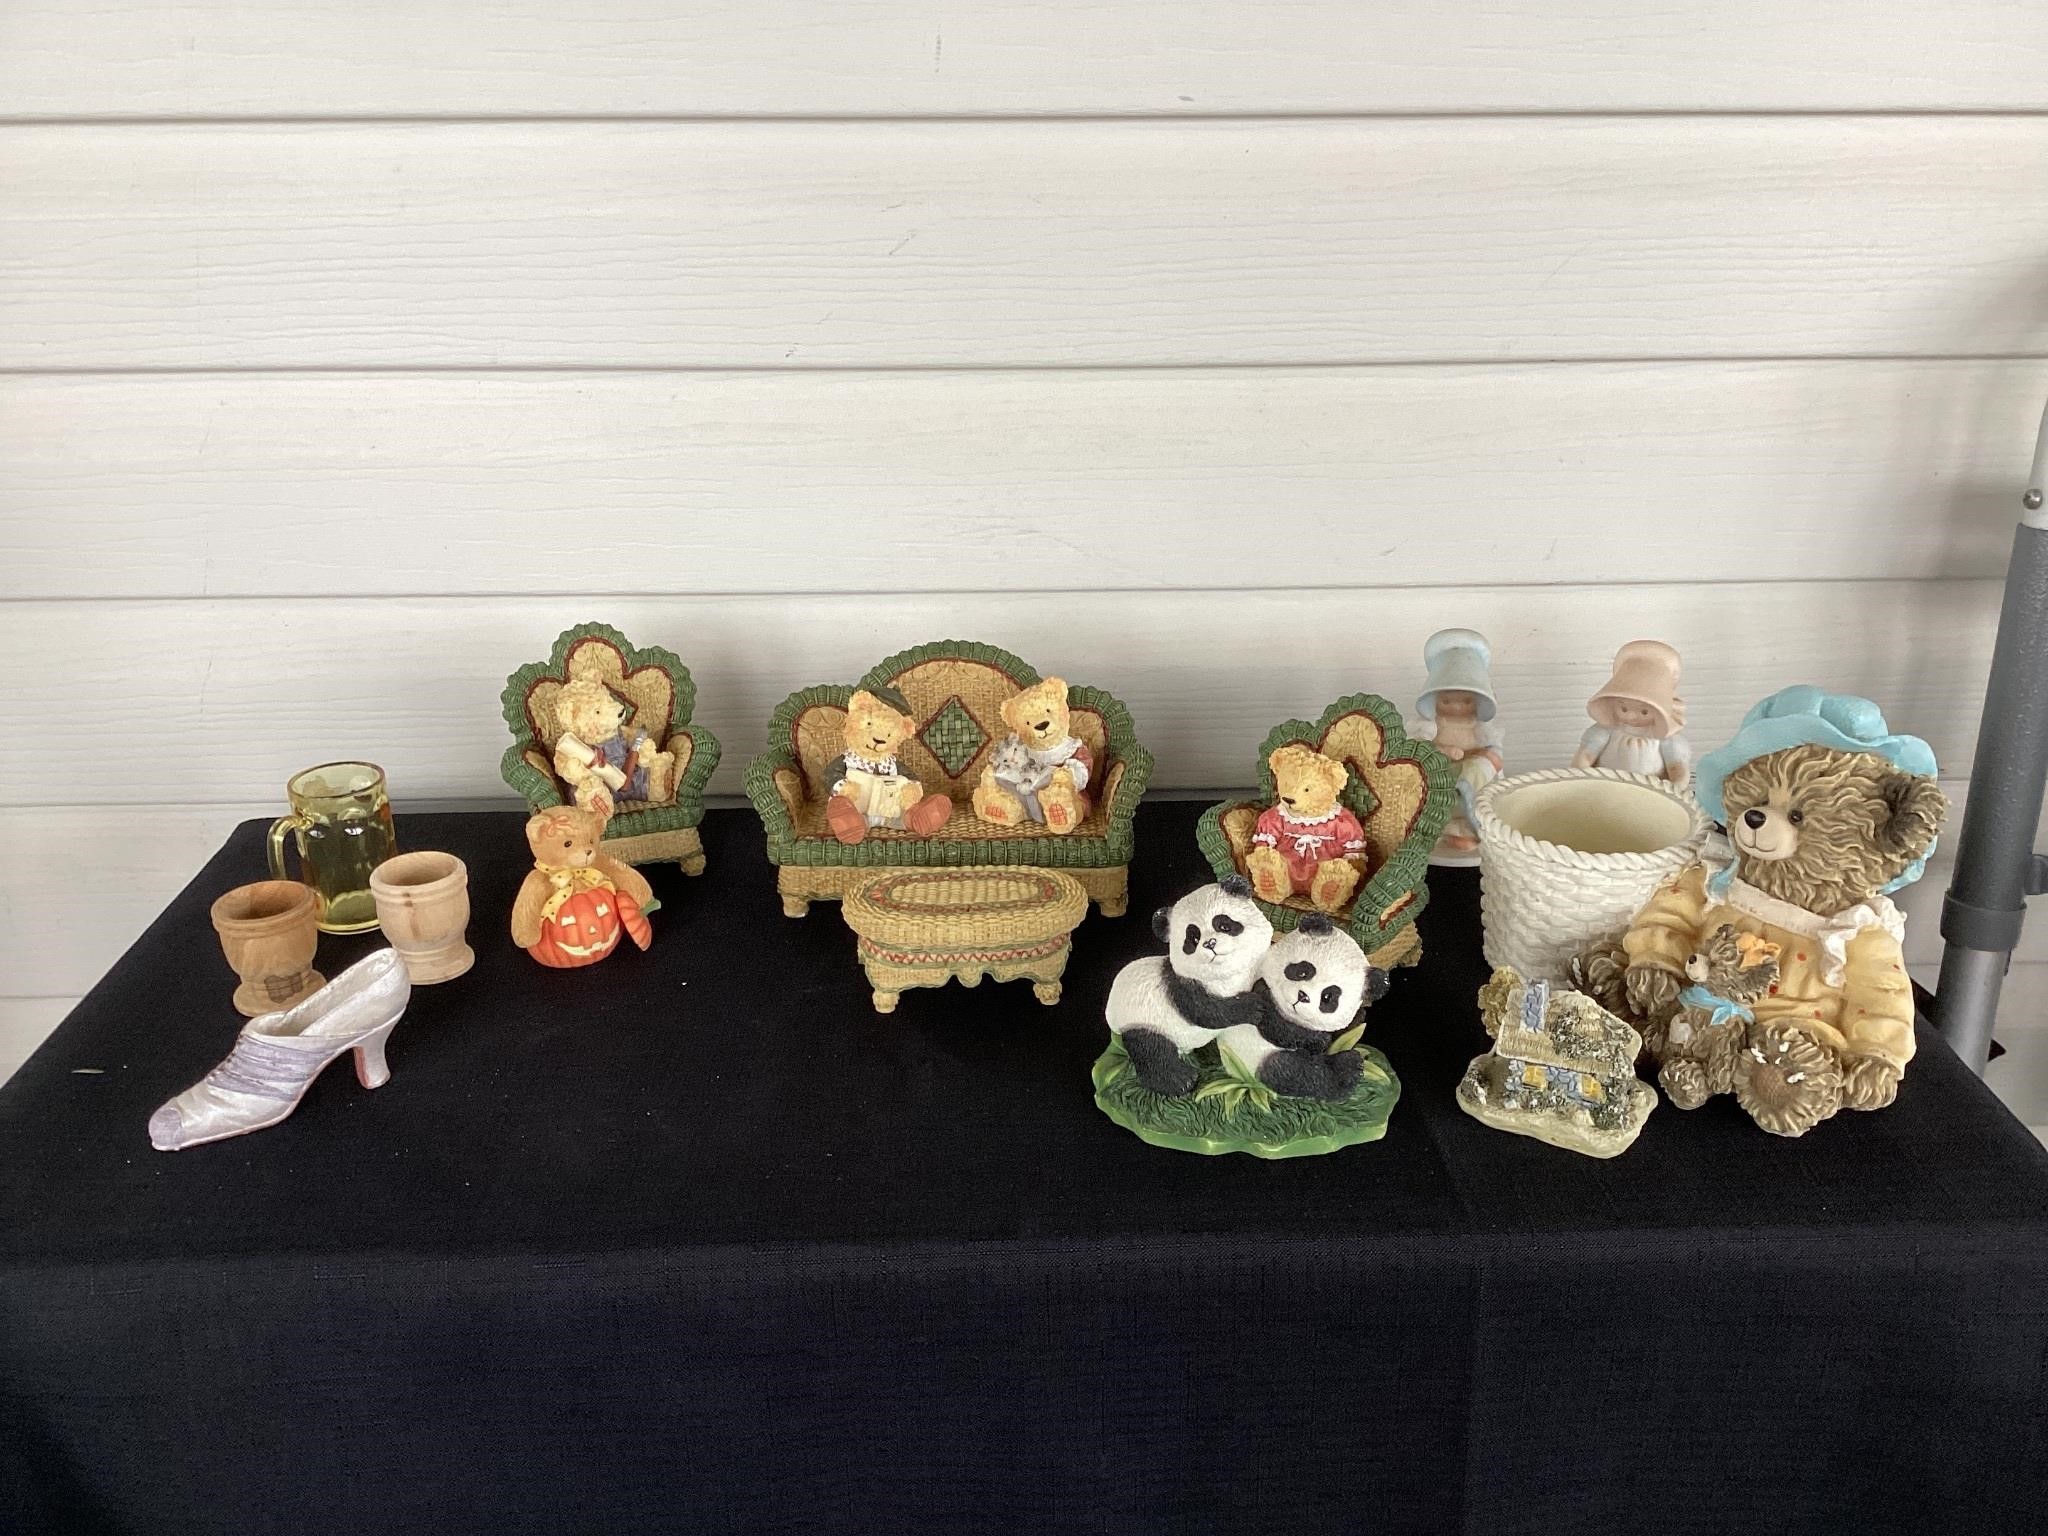 Assorted figurines